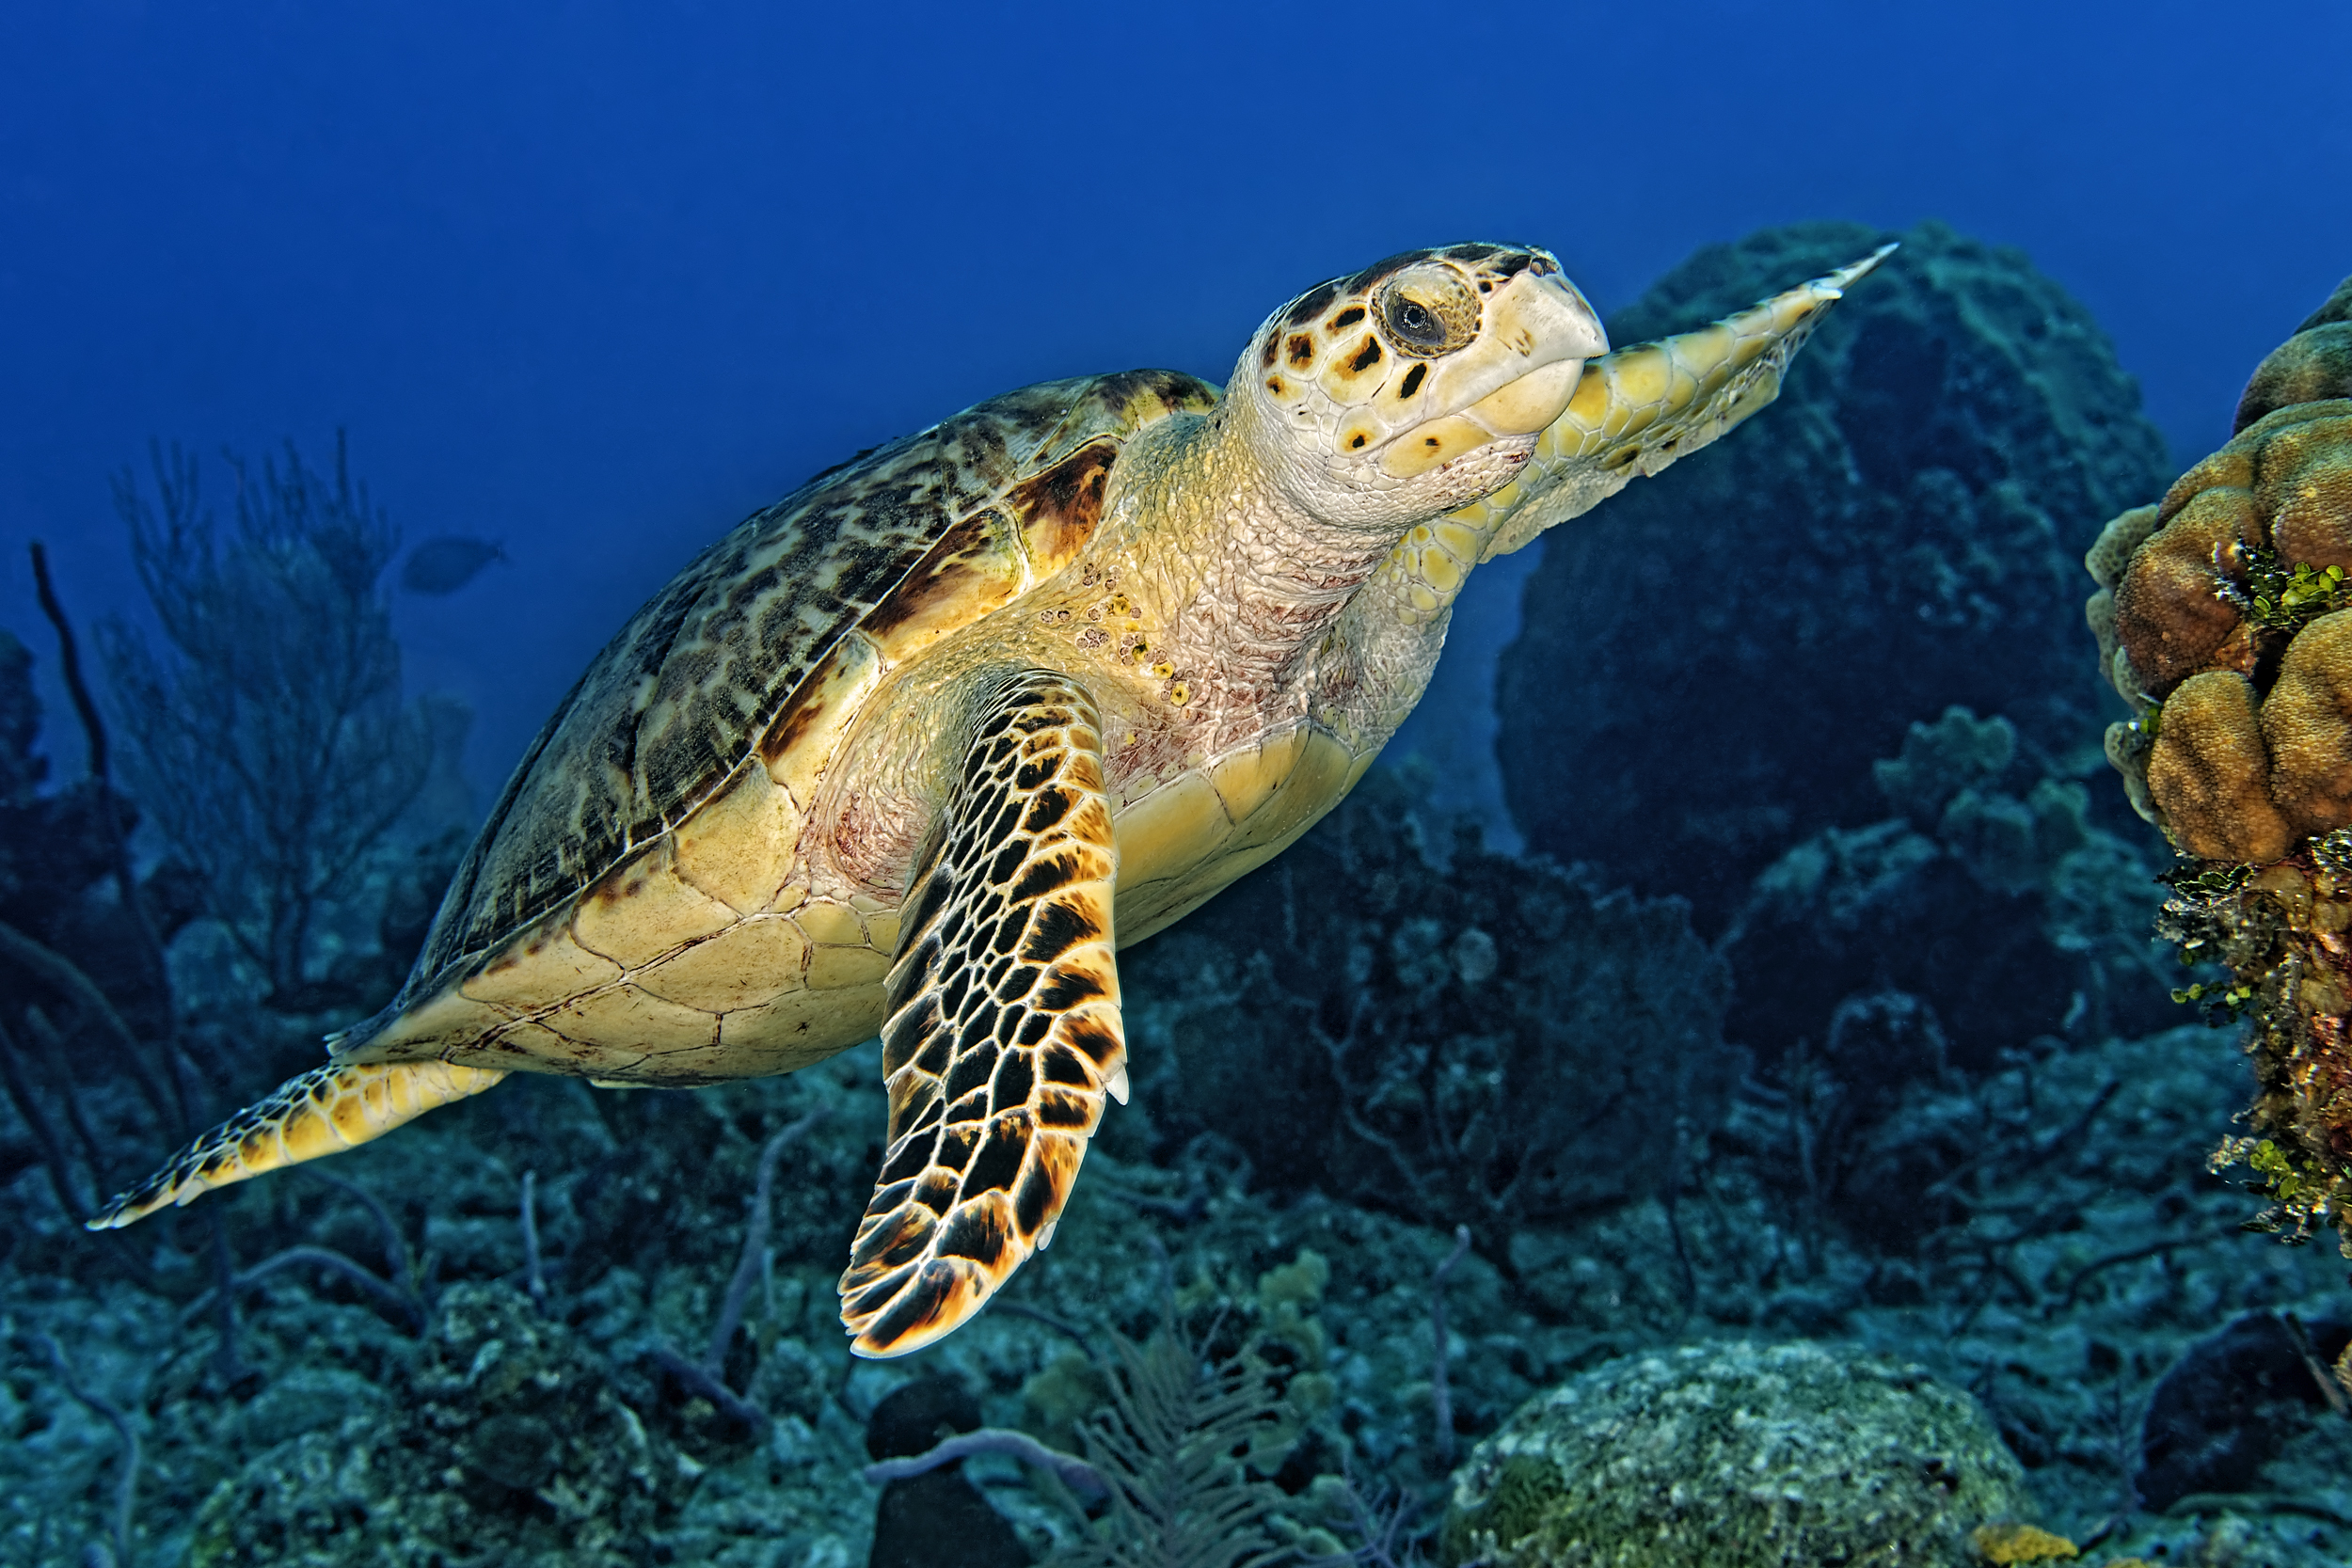 Hawksbill sea turtle, Turks and Caicos. Photo by Scott Johnson